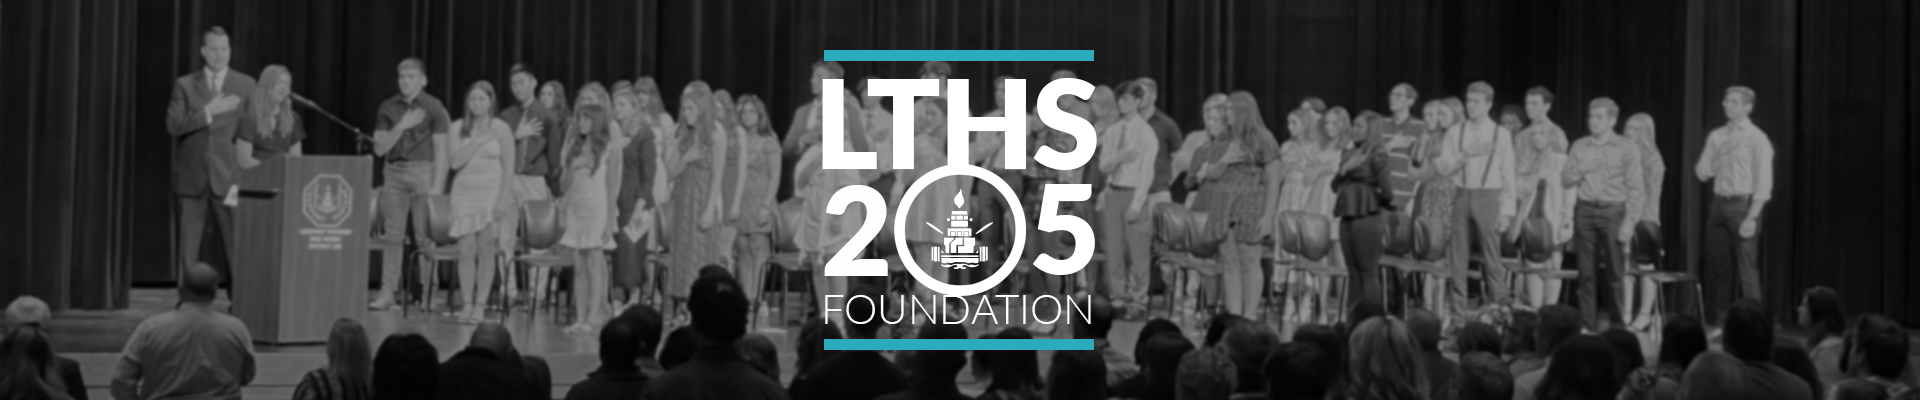 LTHS 205 Foundation